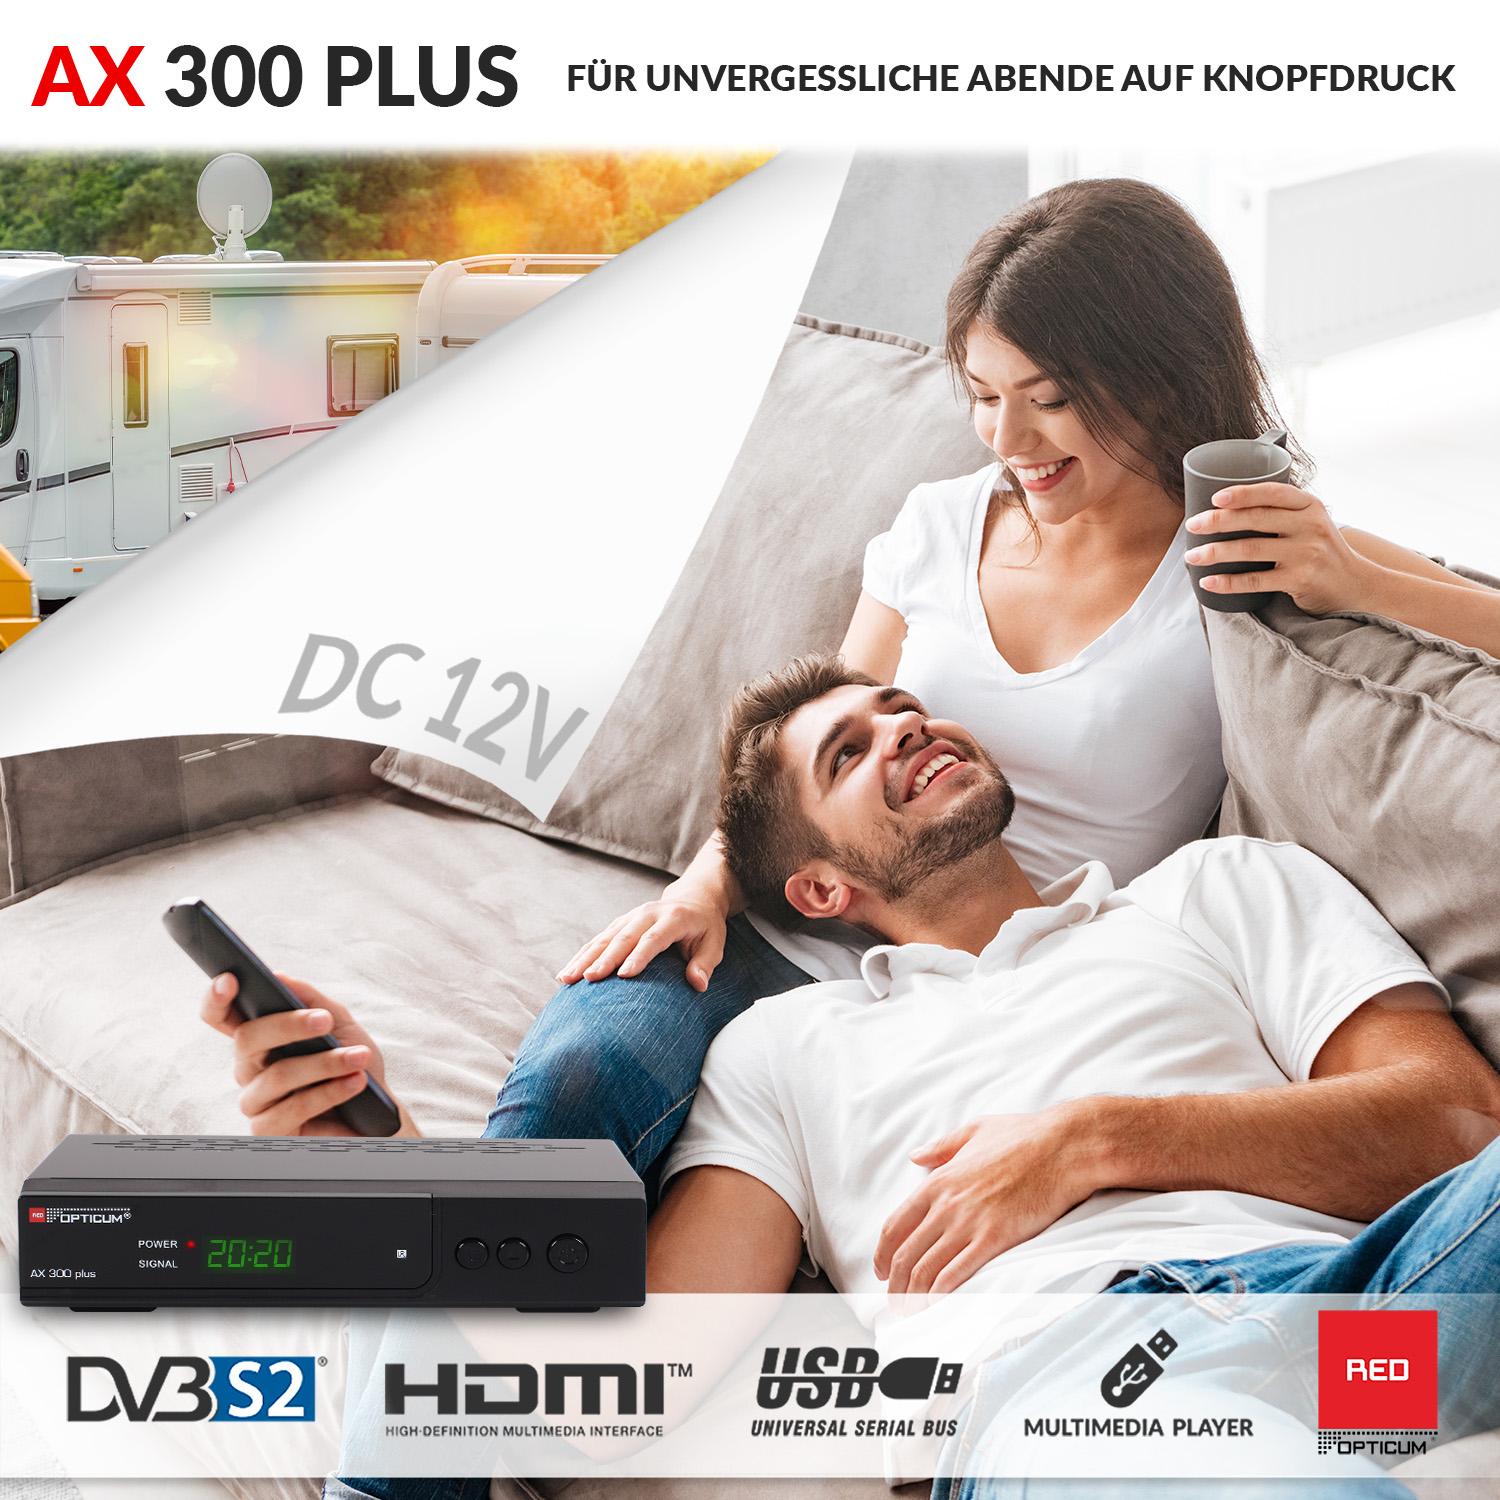 RED OPTICUM AX DVB-S, - HD Receiver DVB-S2 DVB-S2, Digitaler HD Sat HDMI Receiver schwarz) I USB 2.0 SCART Satelliten-Receiver - 300 Plus - DVB-S2 (HDTV, 